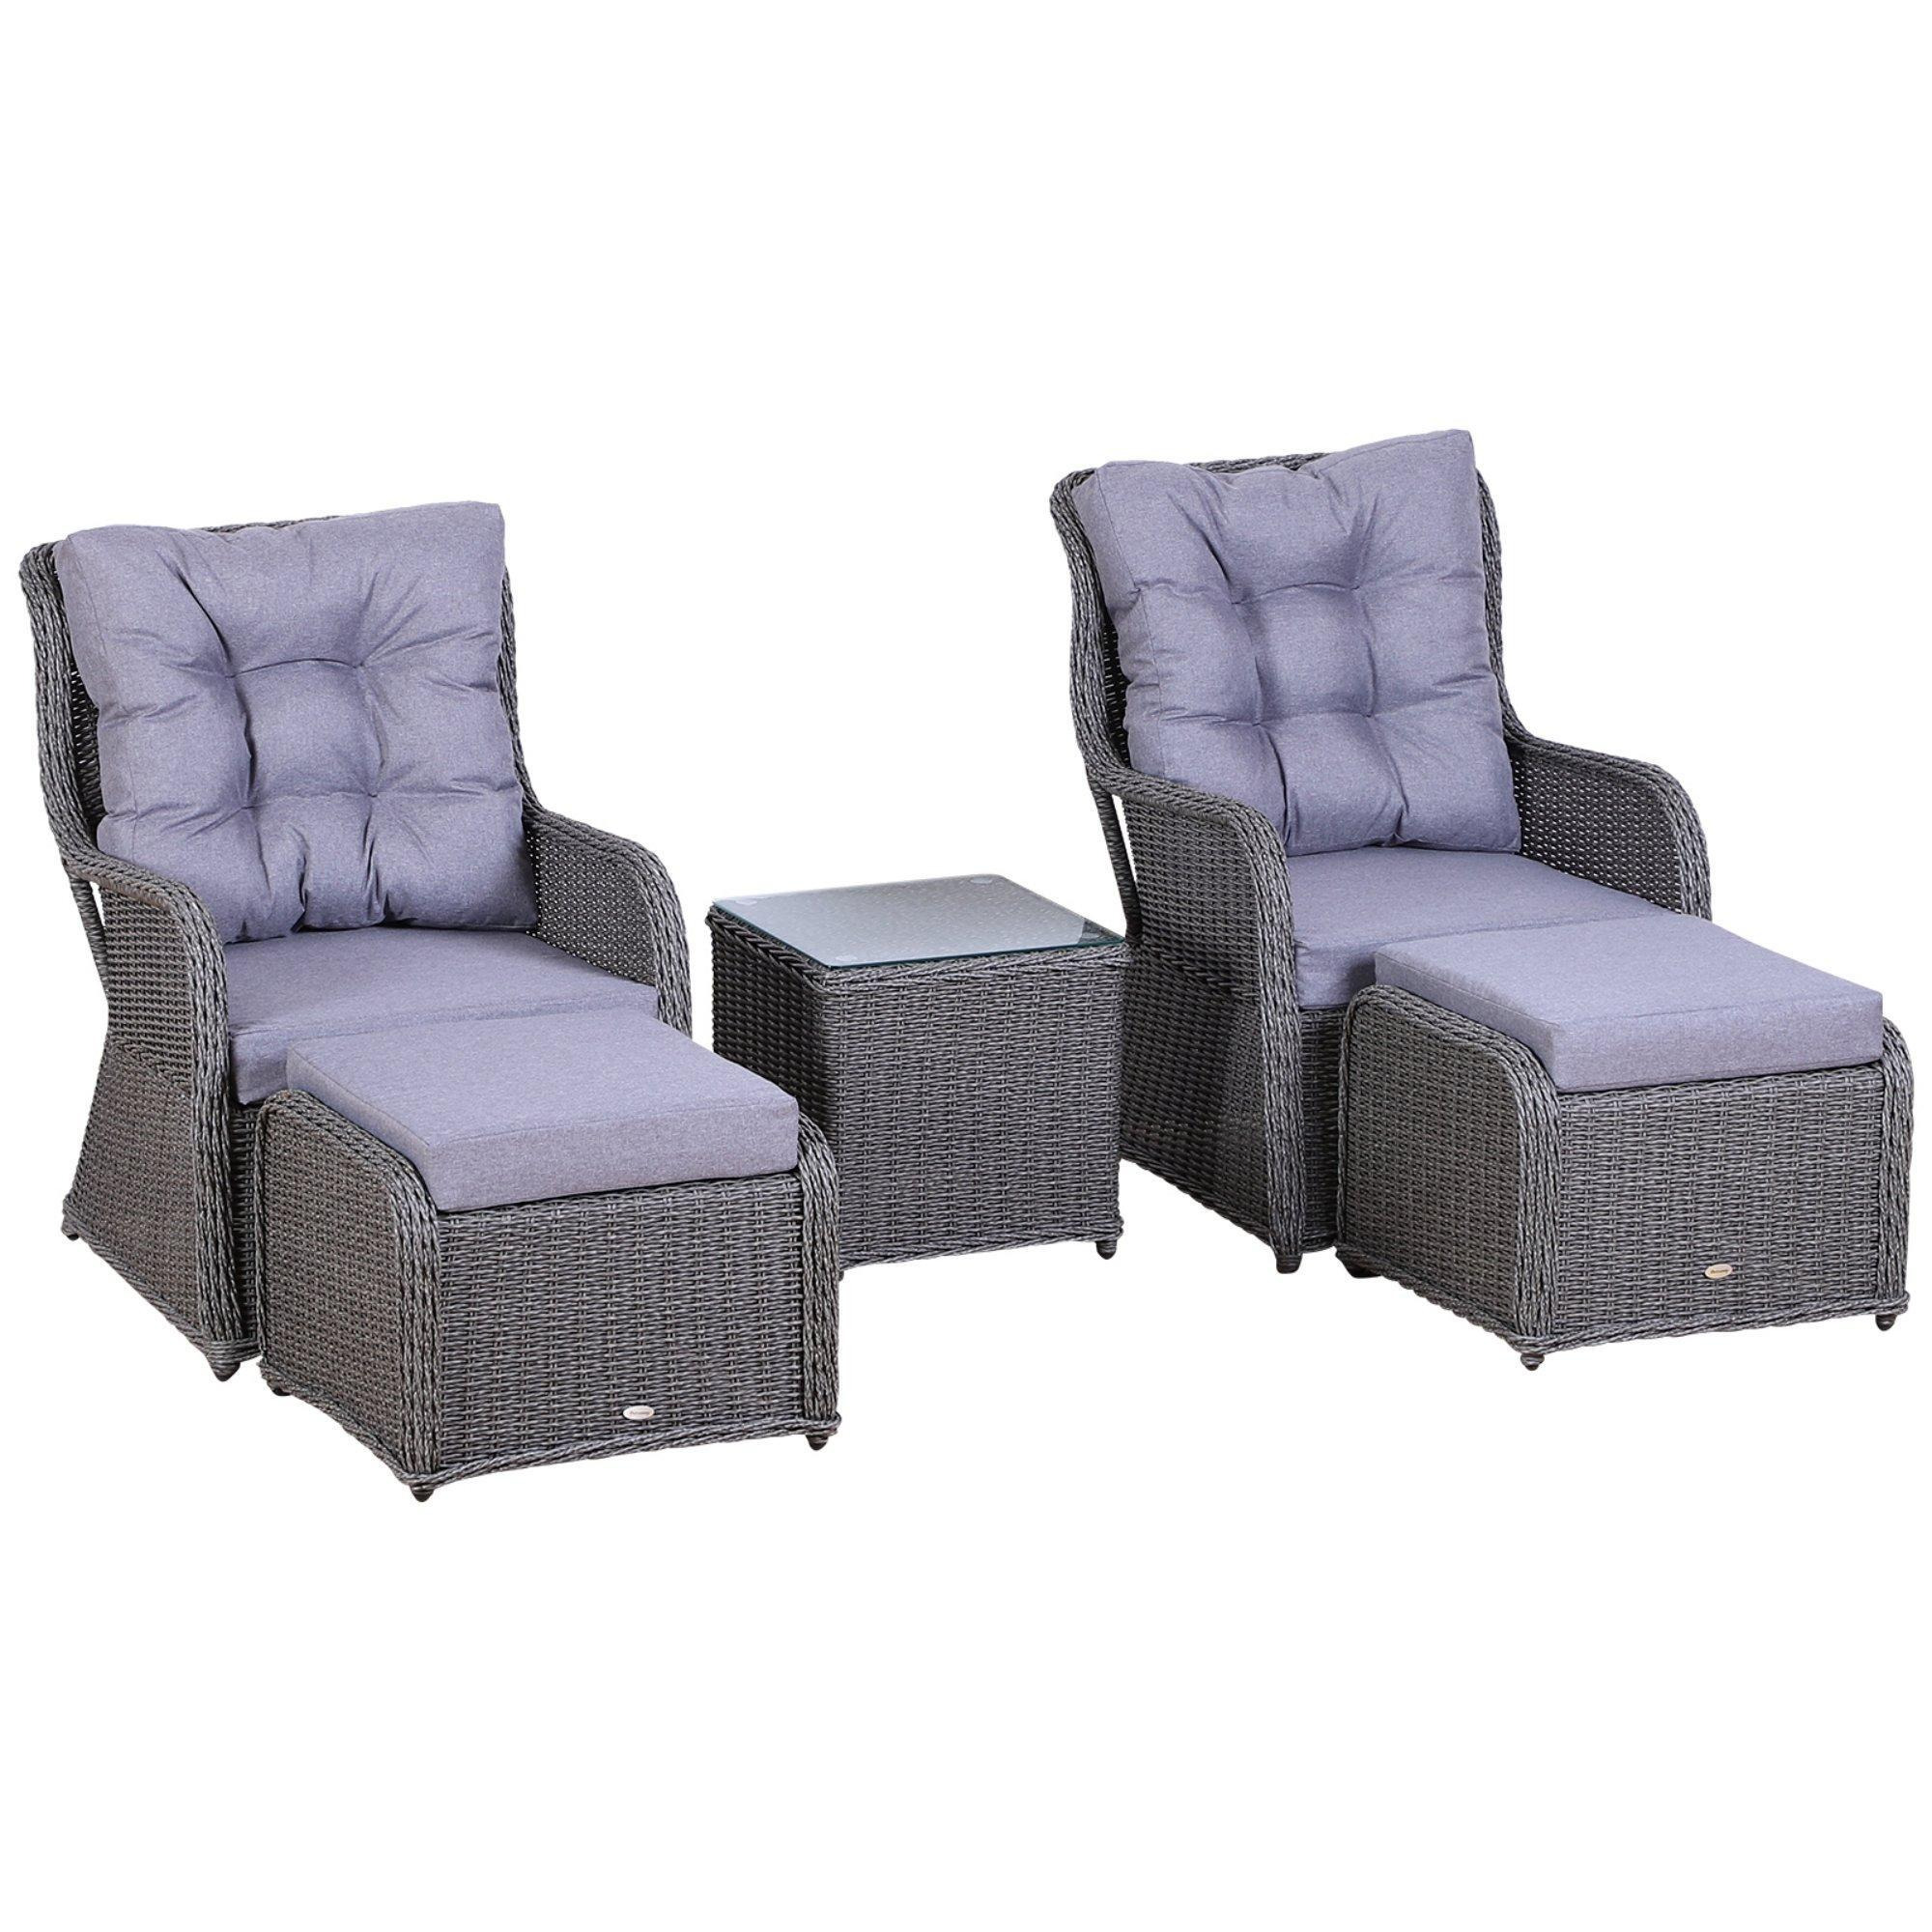 Garden Sofa Chair & Stool Table Set Patio Wicker Weave Furniture Set Outdoor - image 1